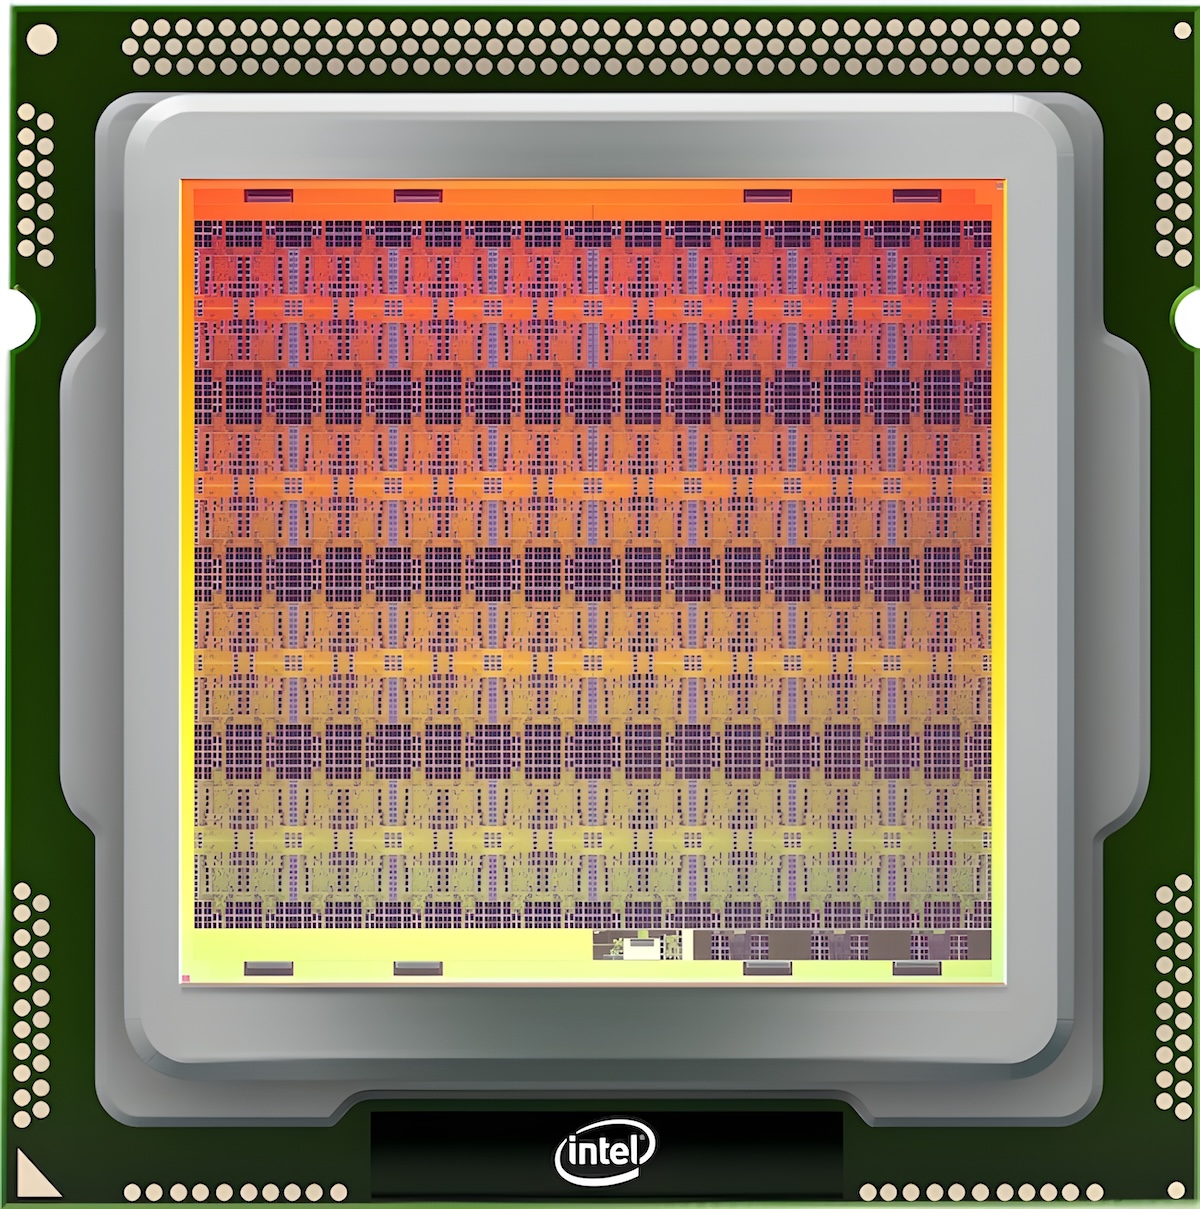 Intel-Neuromorphic-chip-Loihi-2.jpg